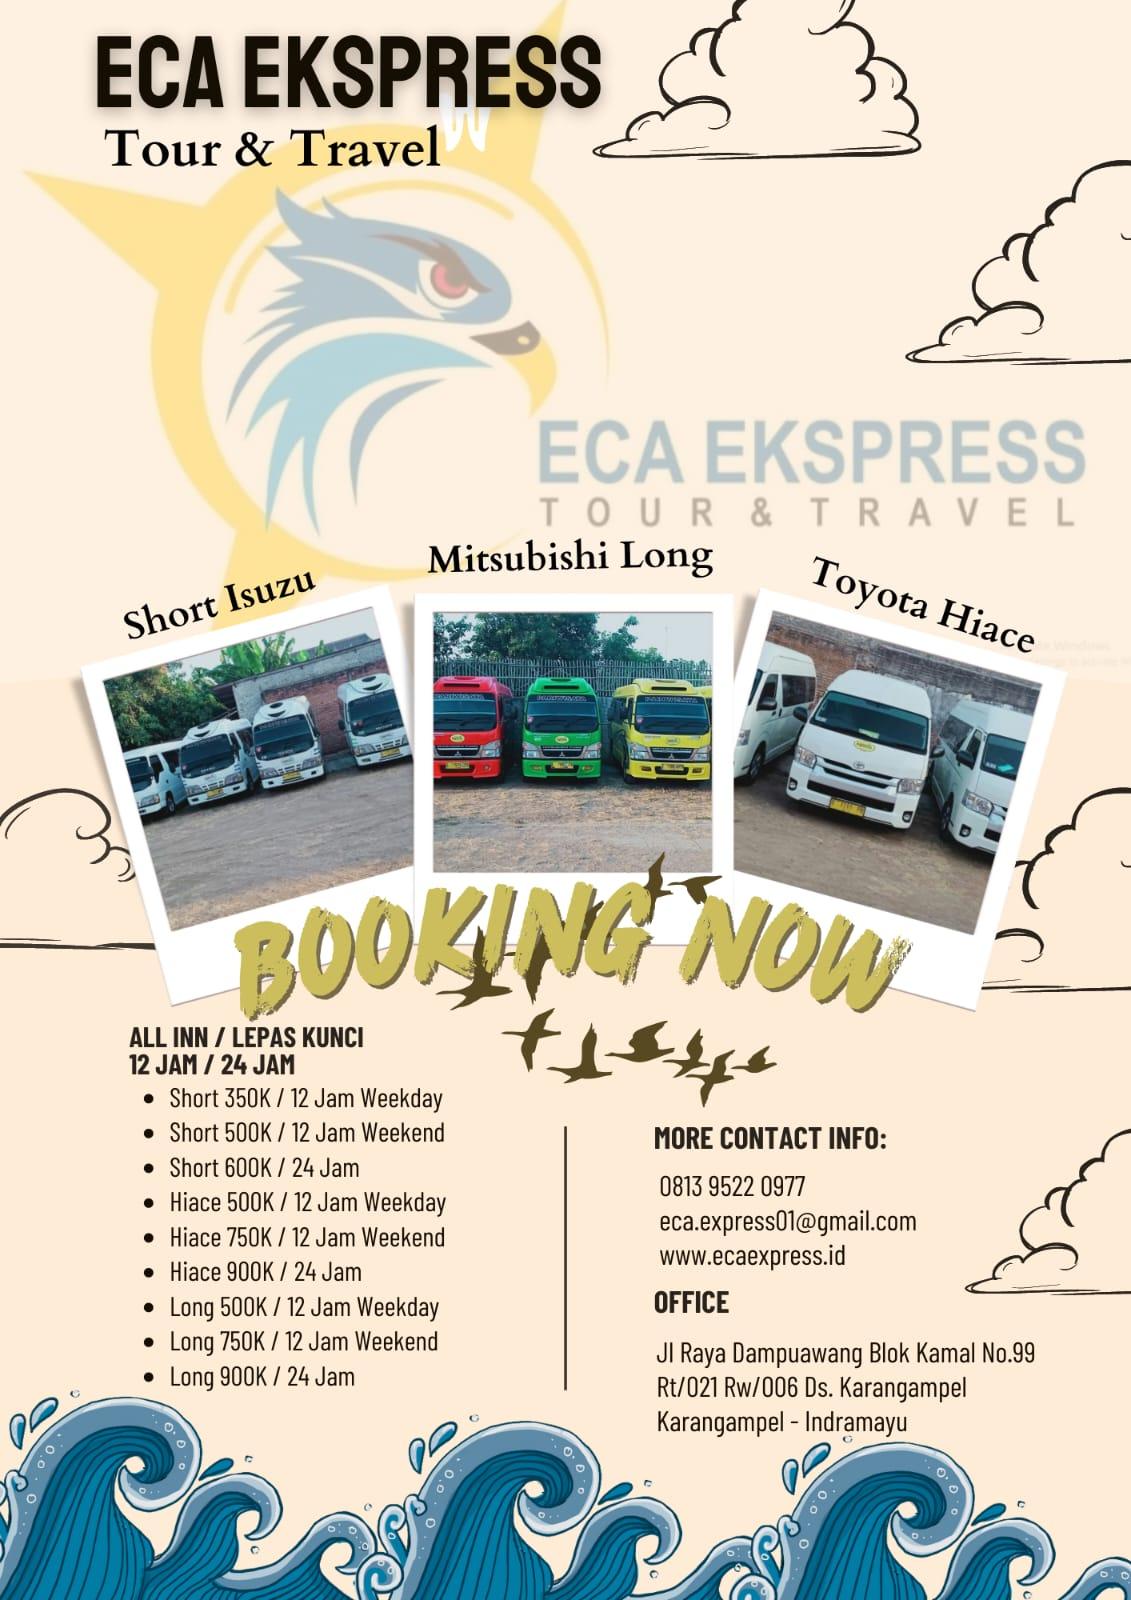 Eca Ekspress Tour , Travel & Rental